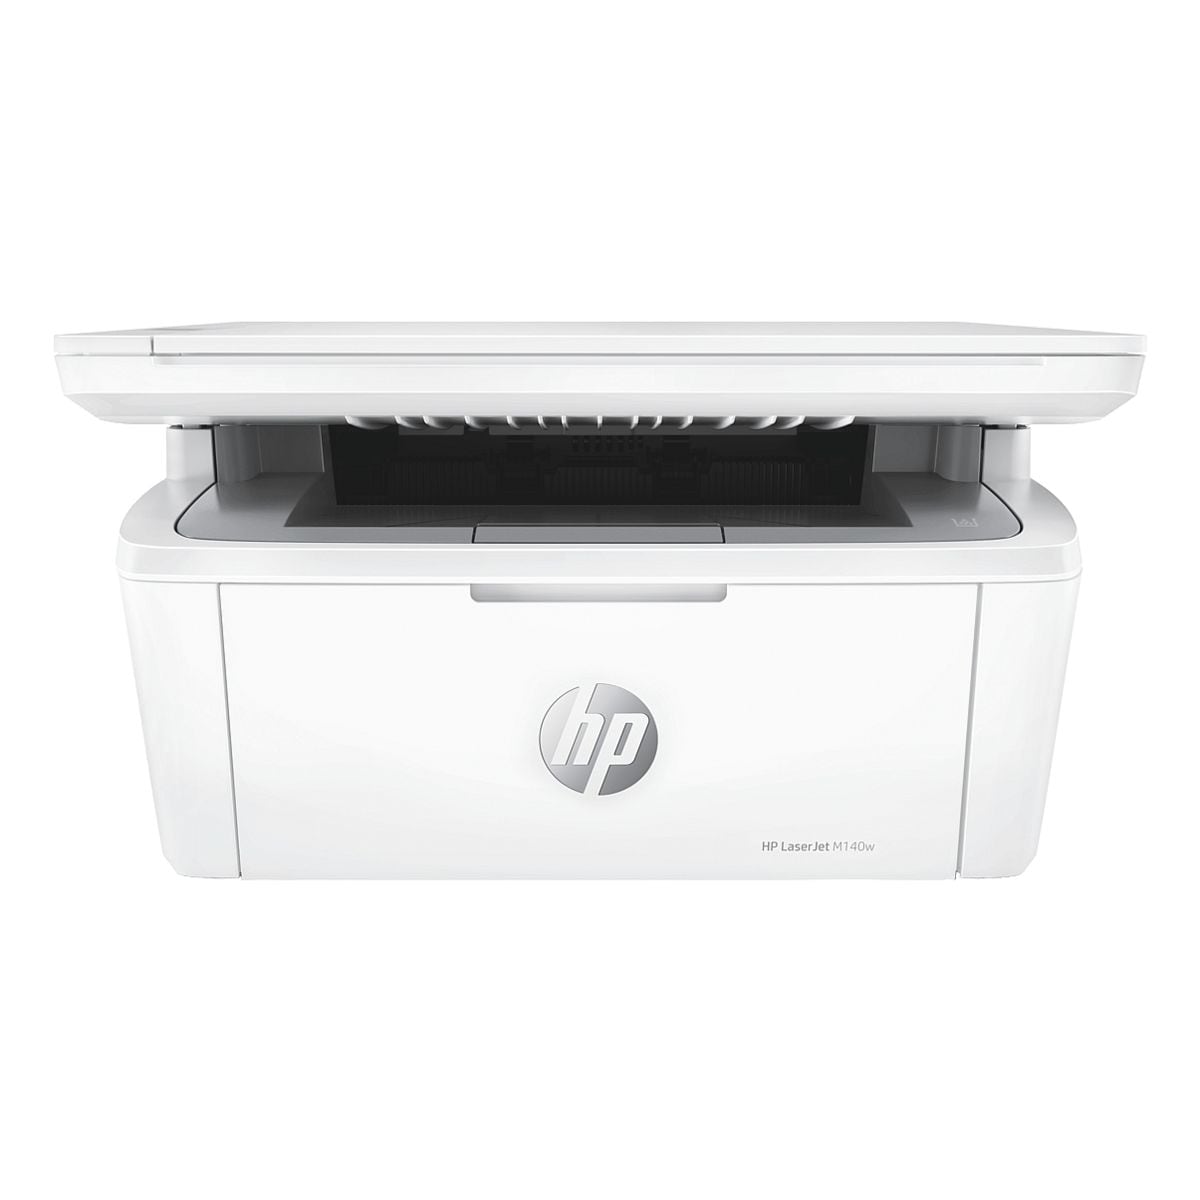 HP All-in-one-printer LaserJet MFP M140w, A4 Zwart/wit laserprinter, 600 x 600 dpi, met WLAN